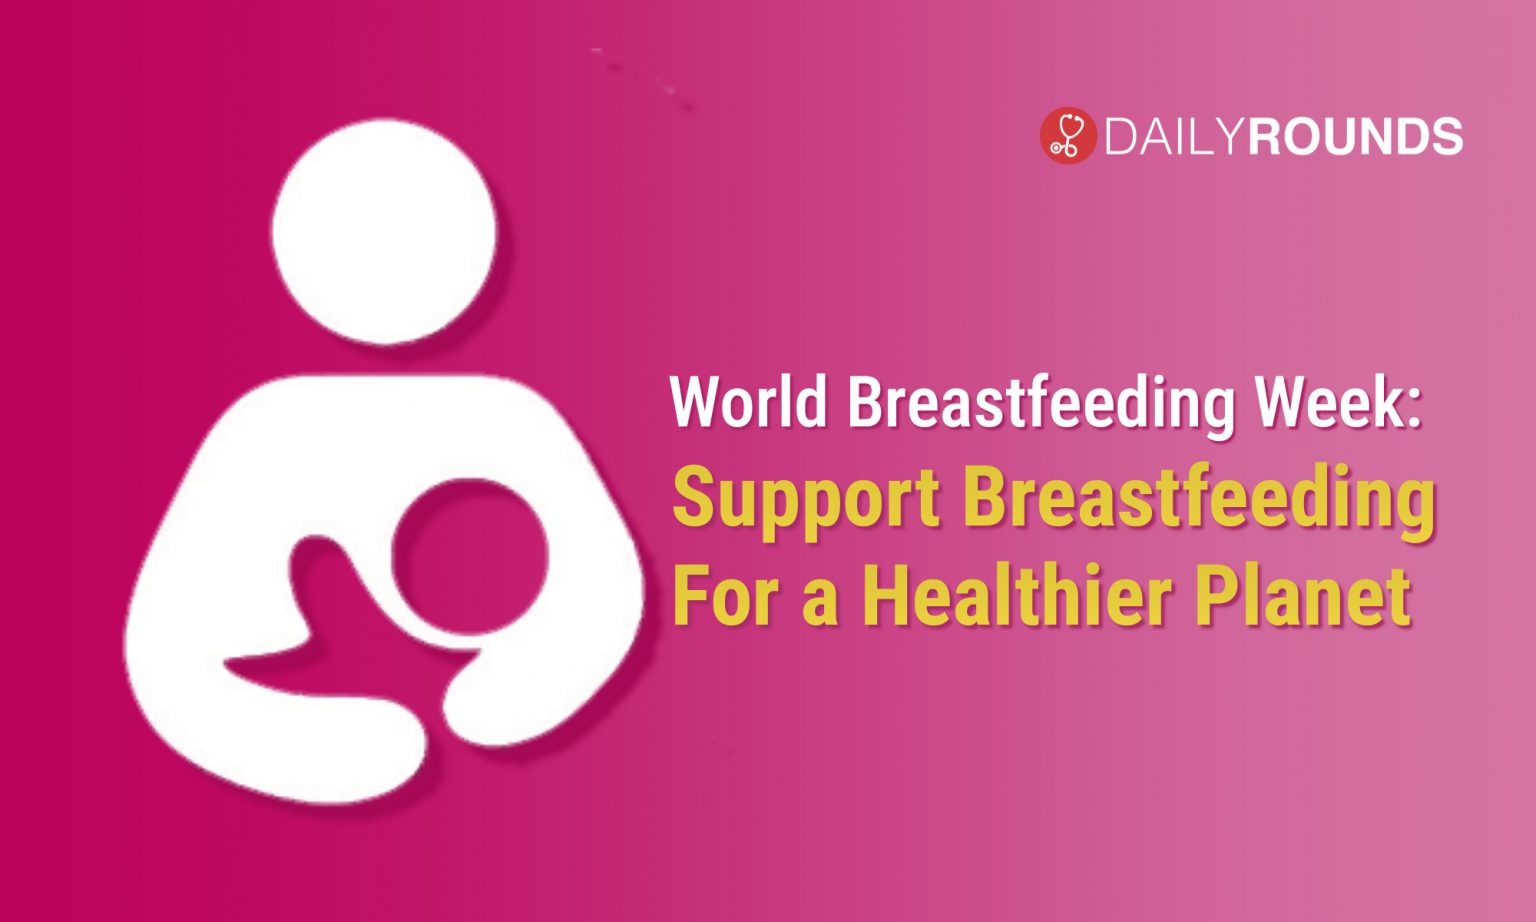 World Breastfeeding Week Support Breastfeeding For a Healthier